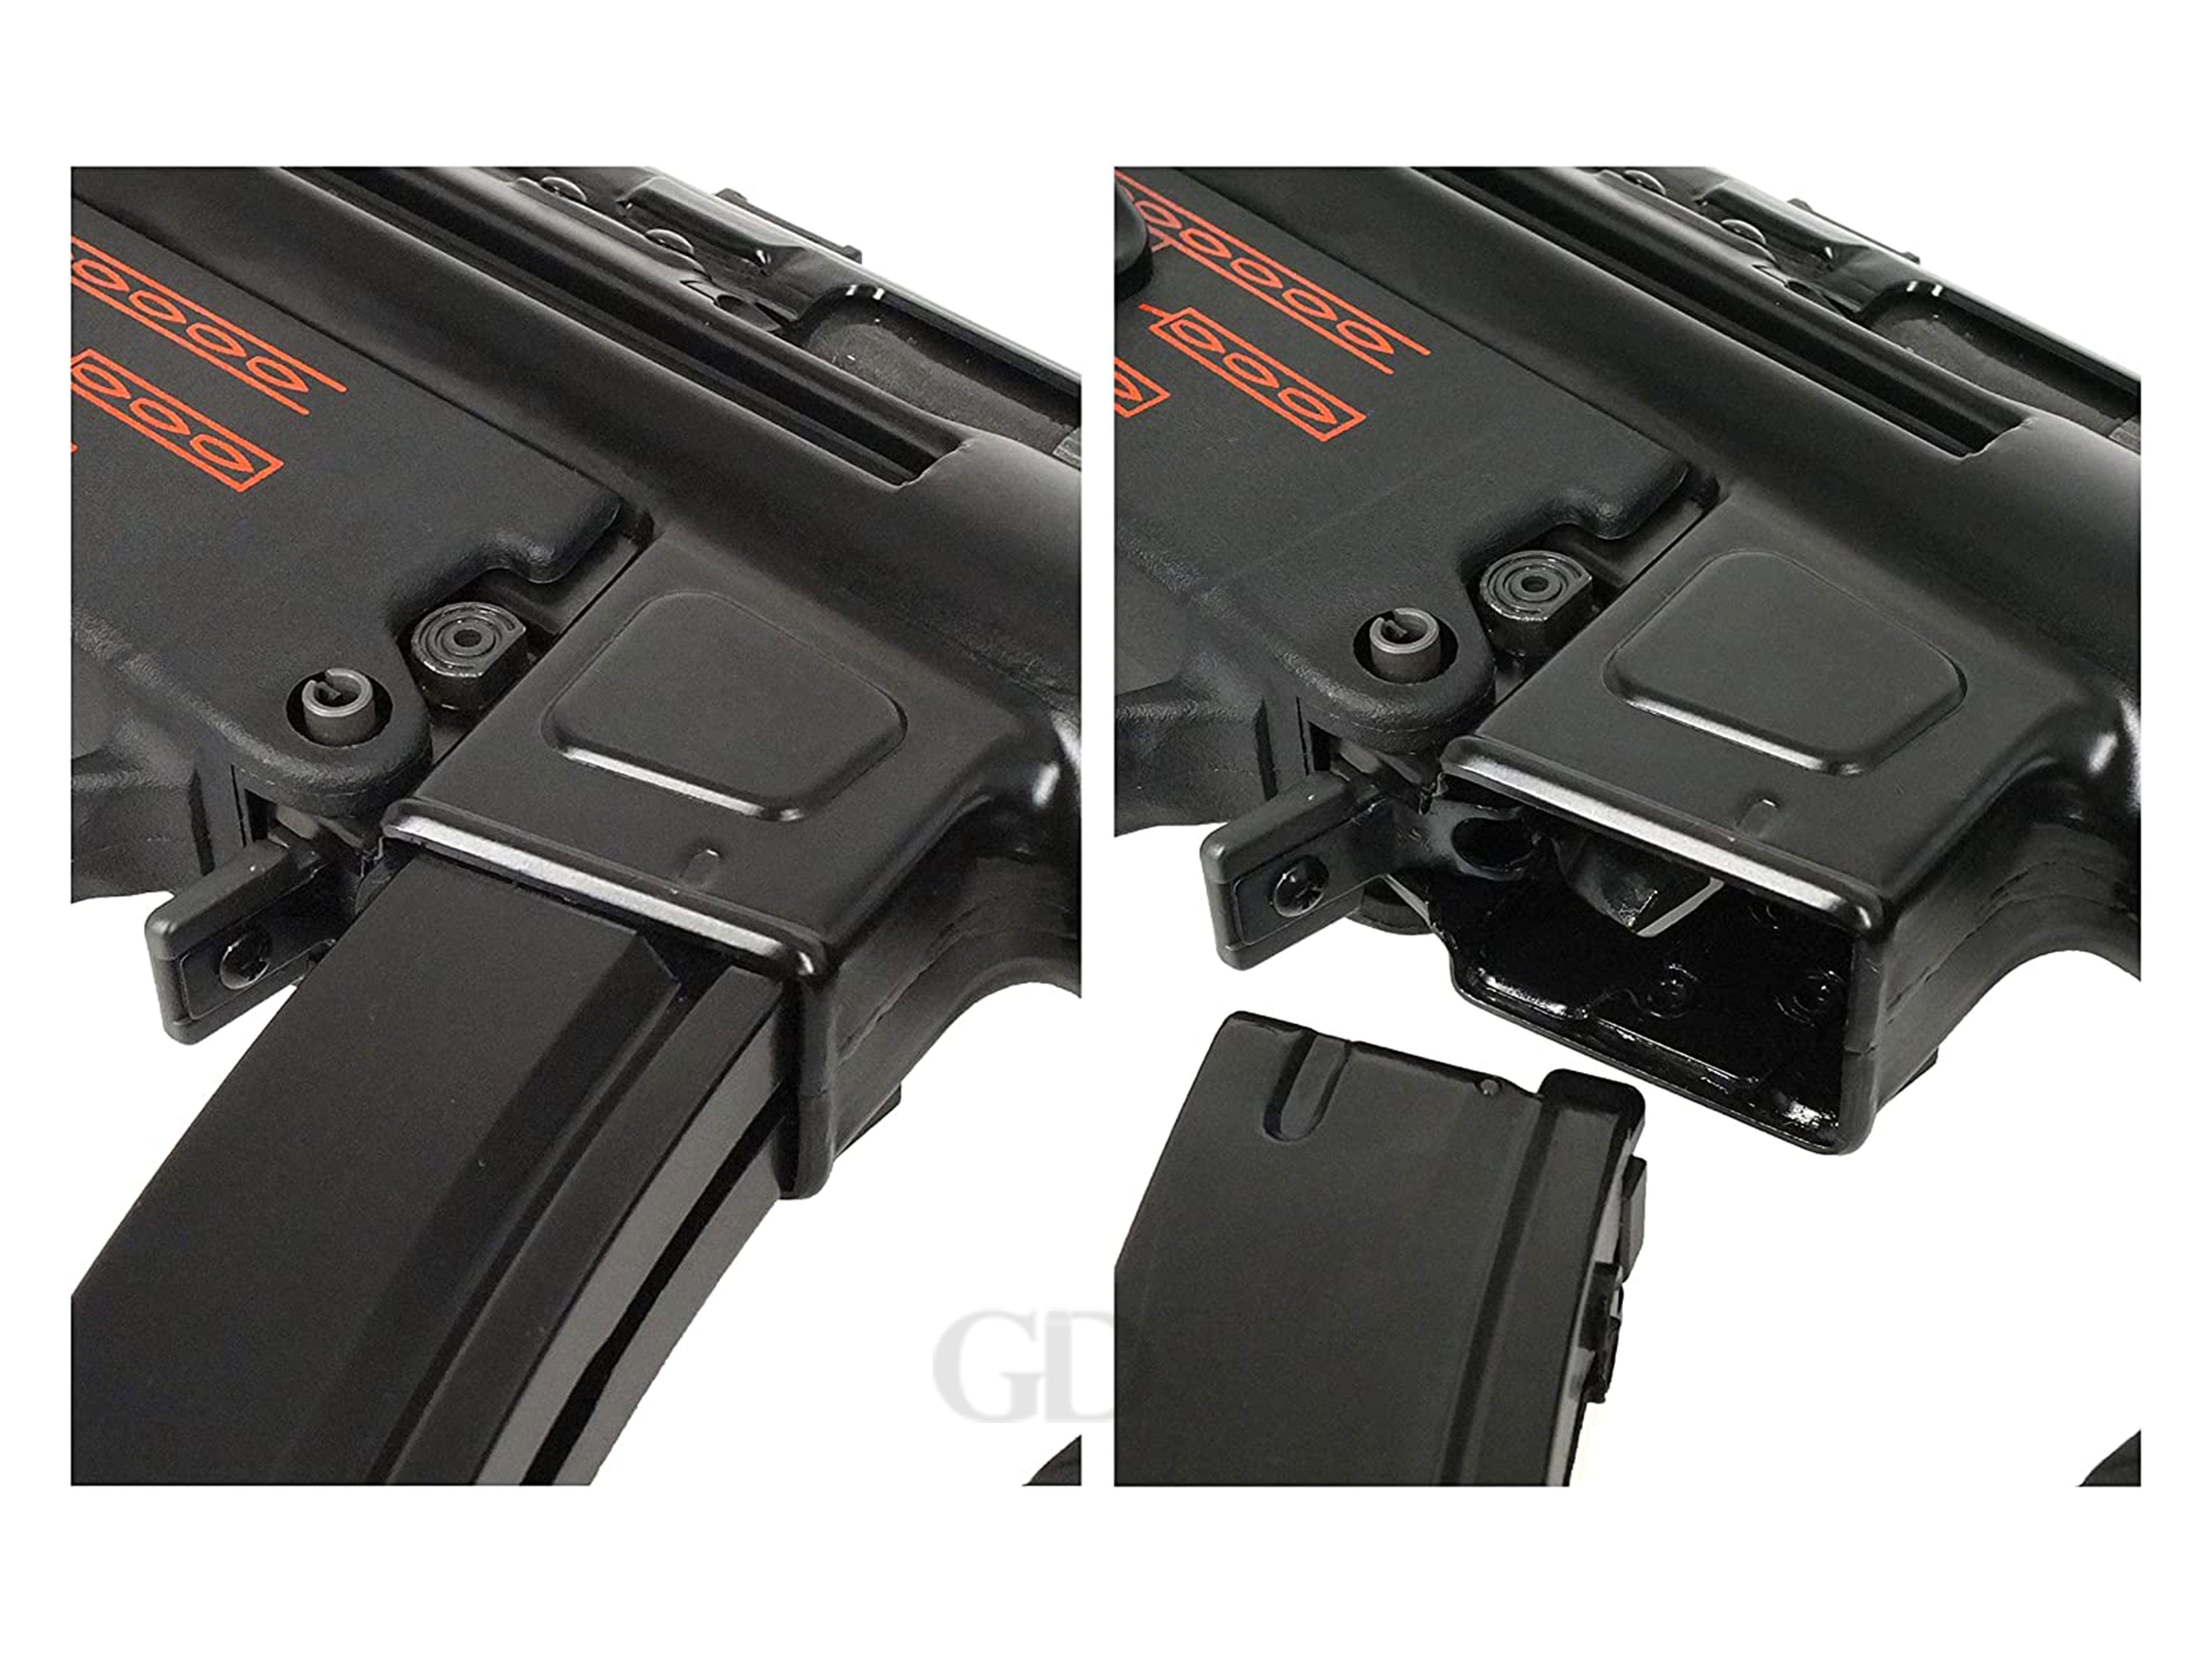 SALE新品WE H&K MP5 APACHE-A3 ガスブローバック サブマシンガン 予備マガジン2本付き ガスガン